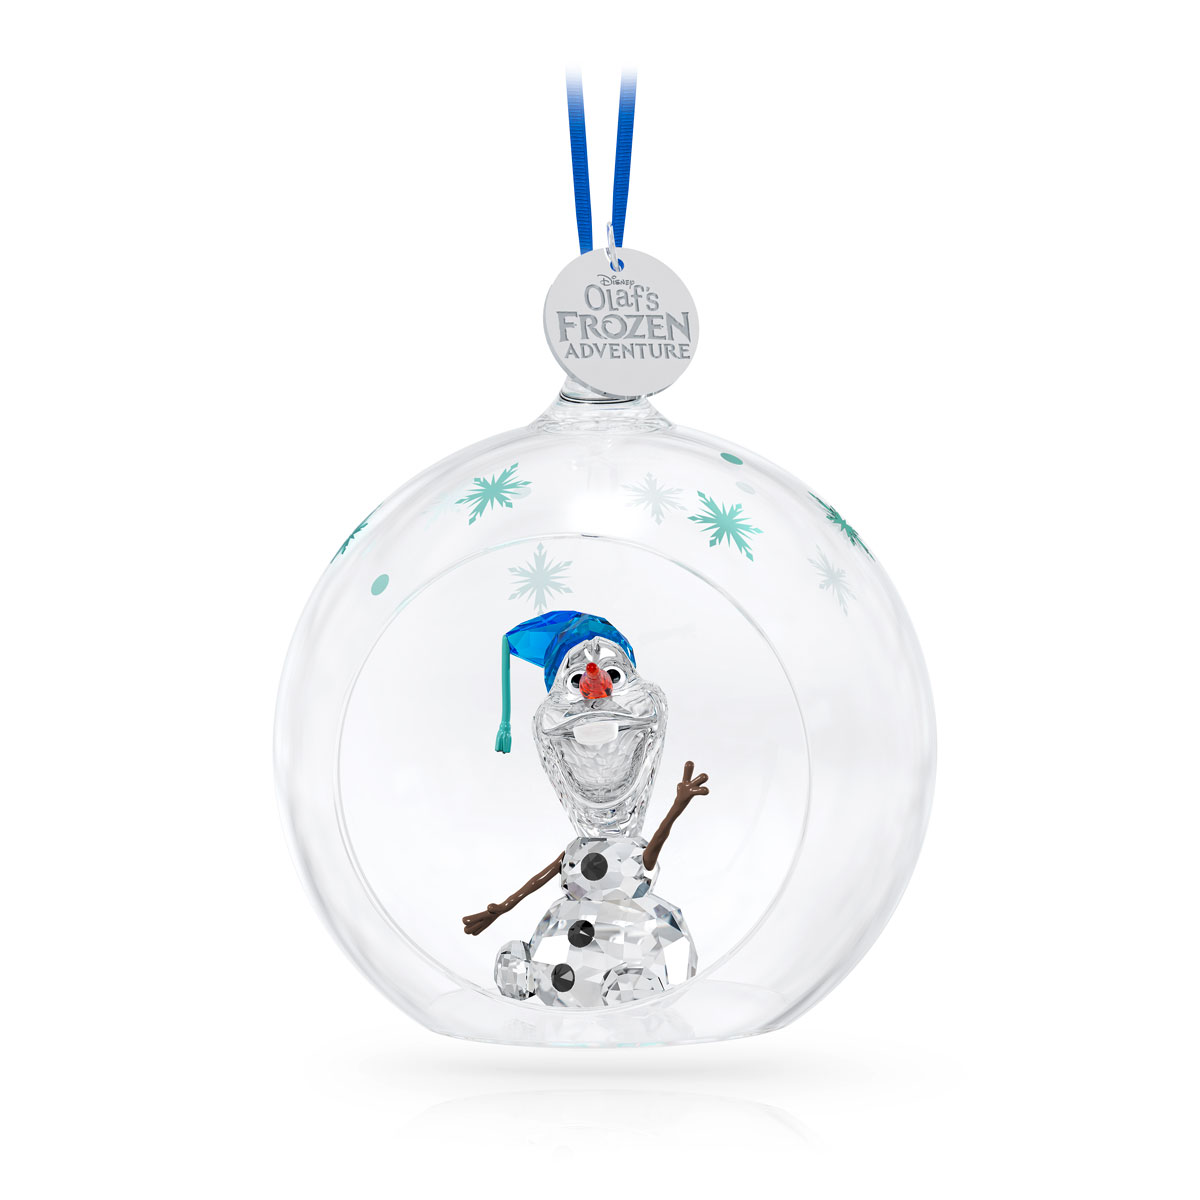 Swarovski 2023 Frozen Ball Ornament, Olaf